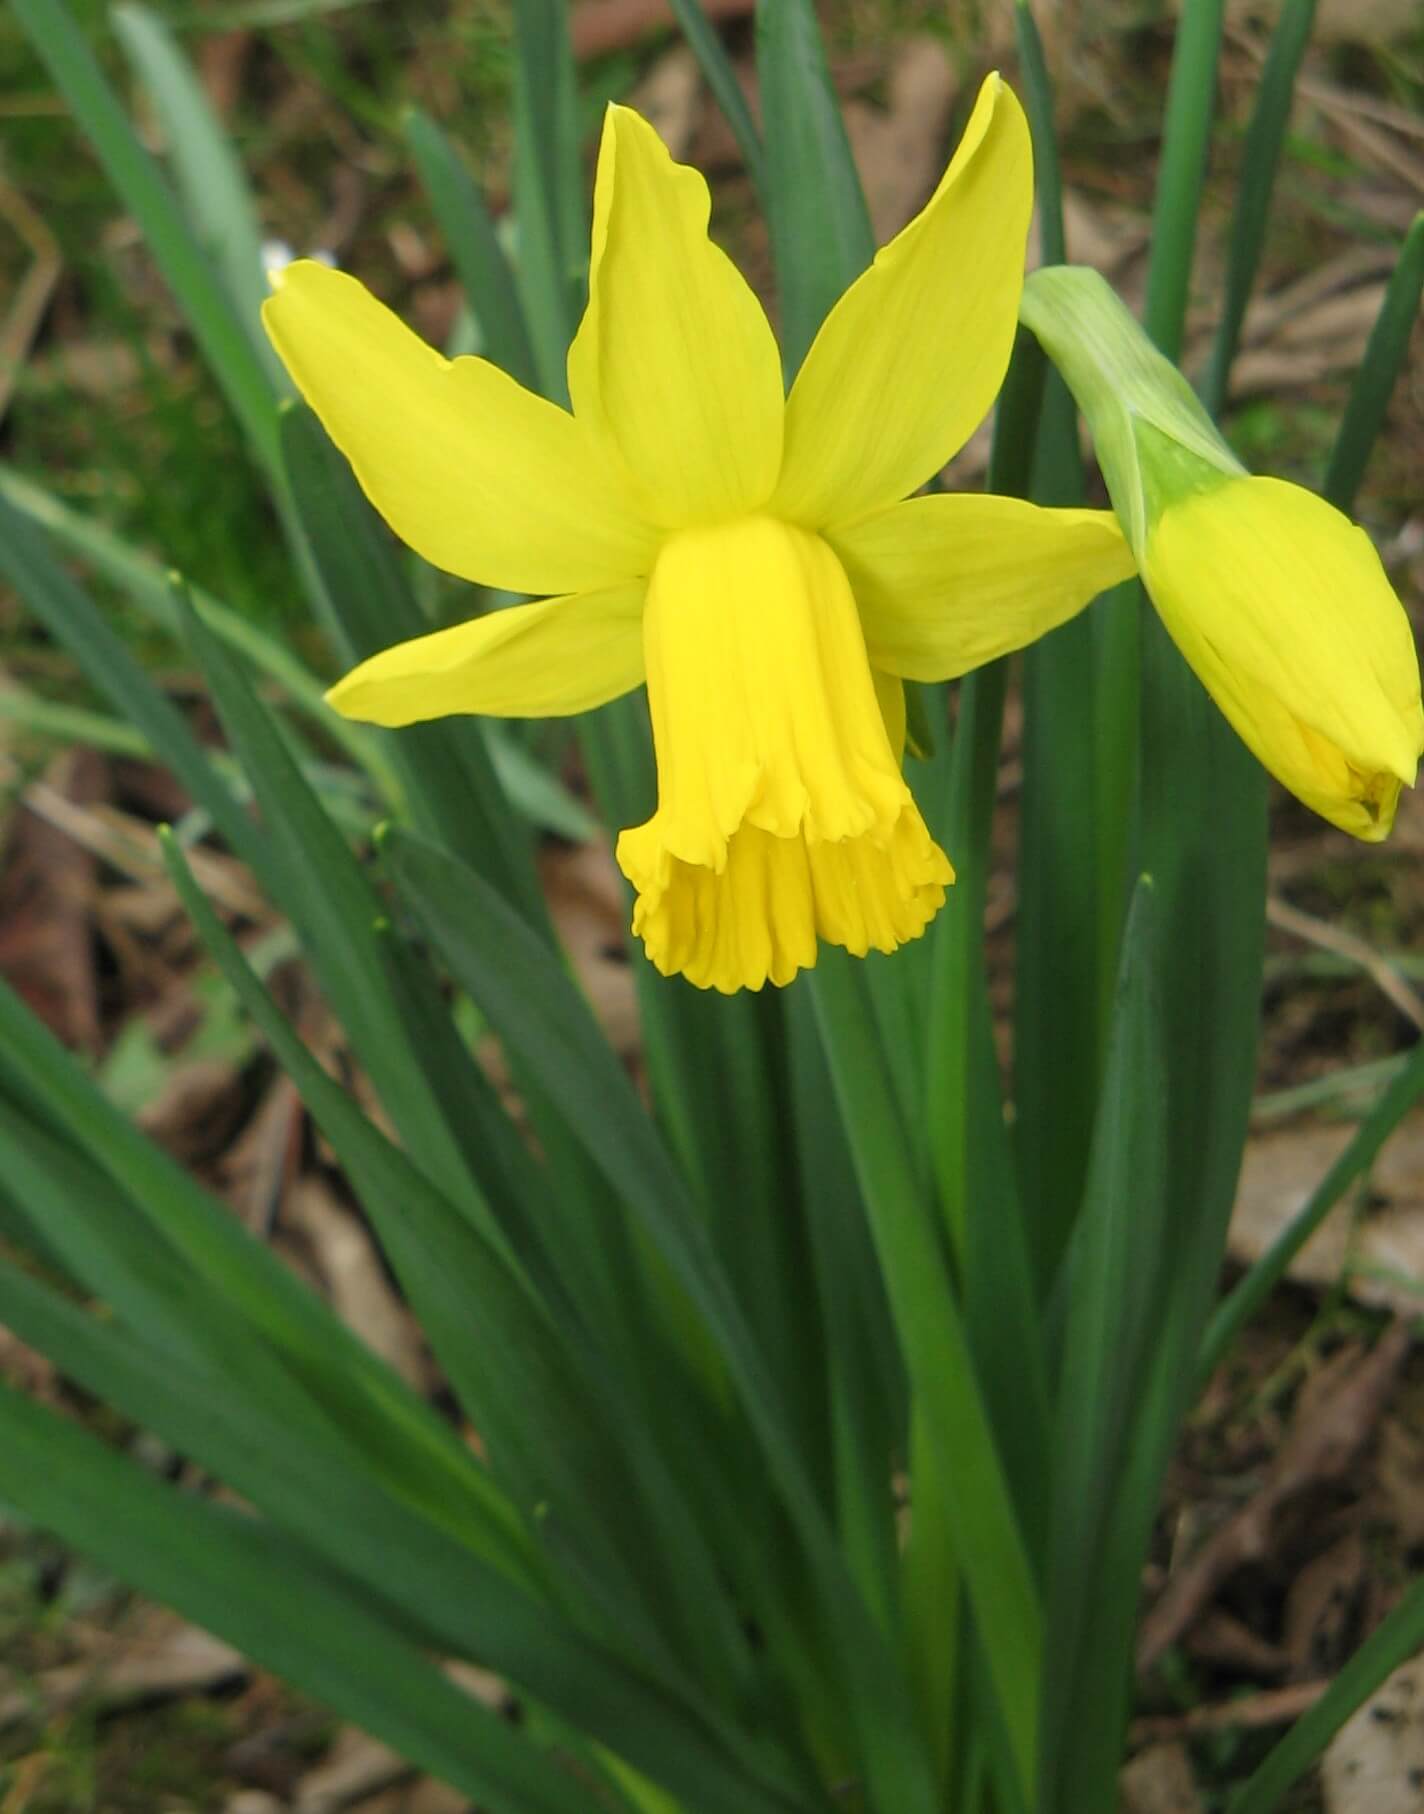 Cyclamineus Daffodils (Narcissus cyclamineus)